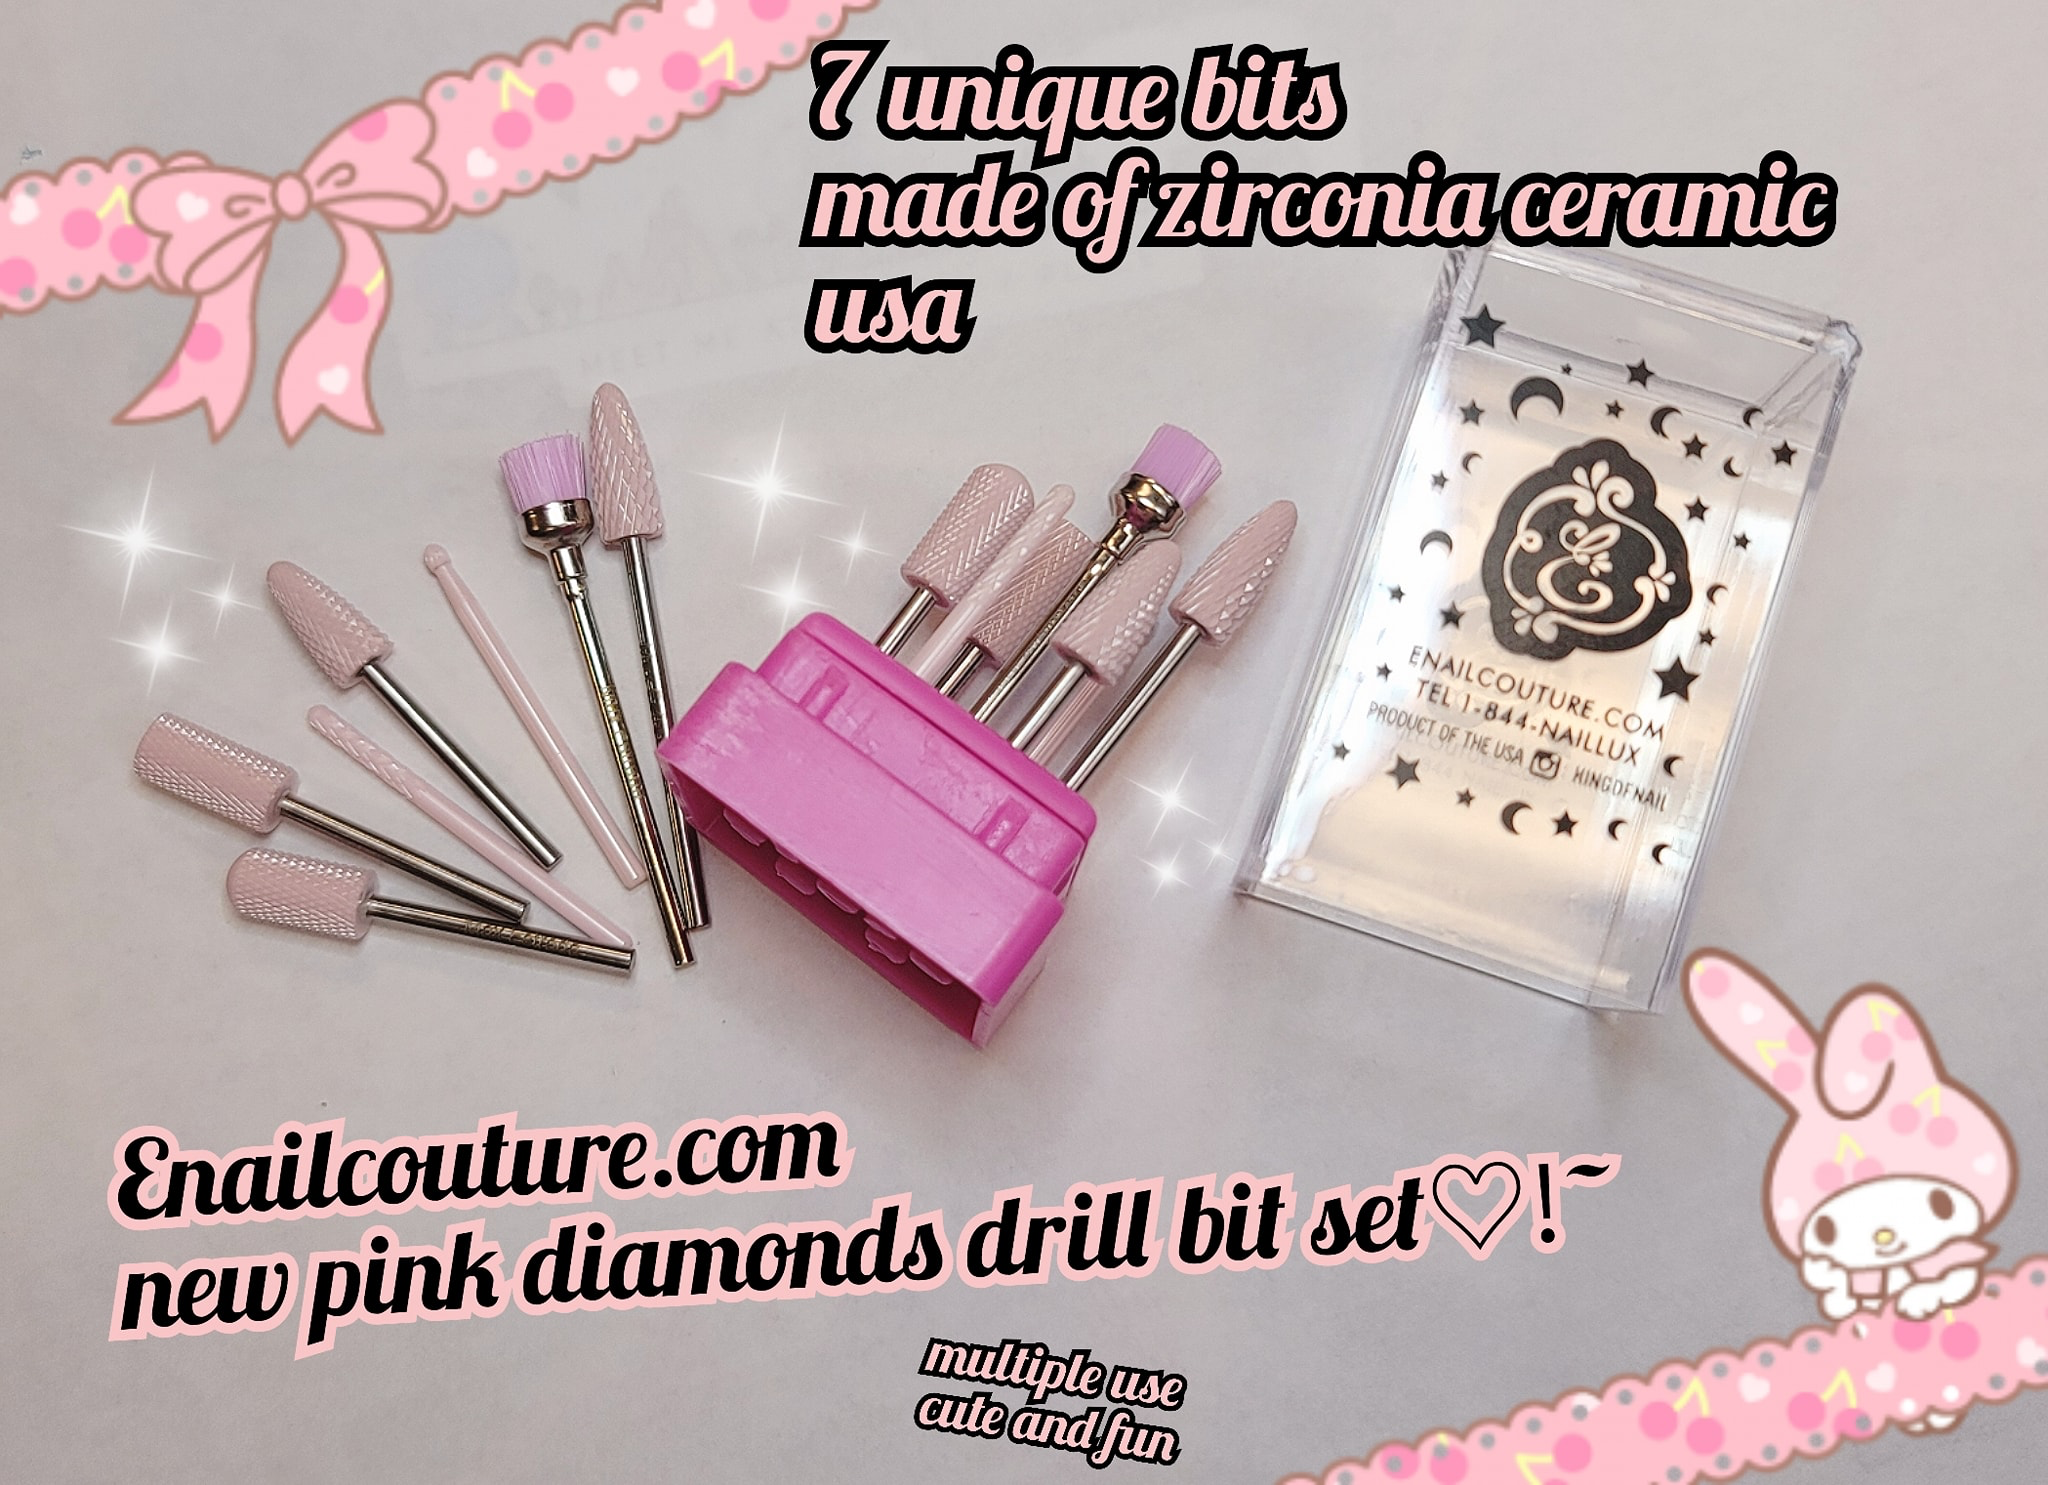 NEW Pink Diamond Nail Drill Bit Set ! ( 7pcs Nail Drill Bits for Acrylic Nails - 3/32 Professional Ceramic Nail Drill Bit Set for Cuticle Acrylic Gel Nail Polishing Manicure)